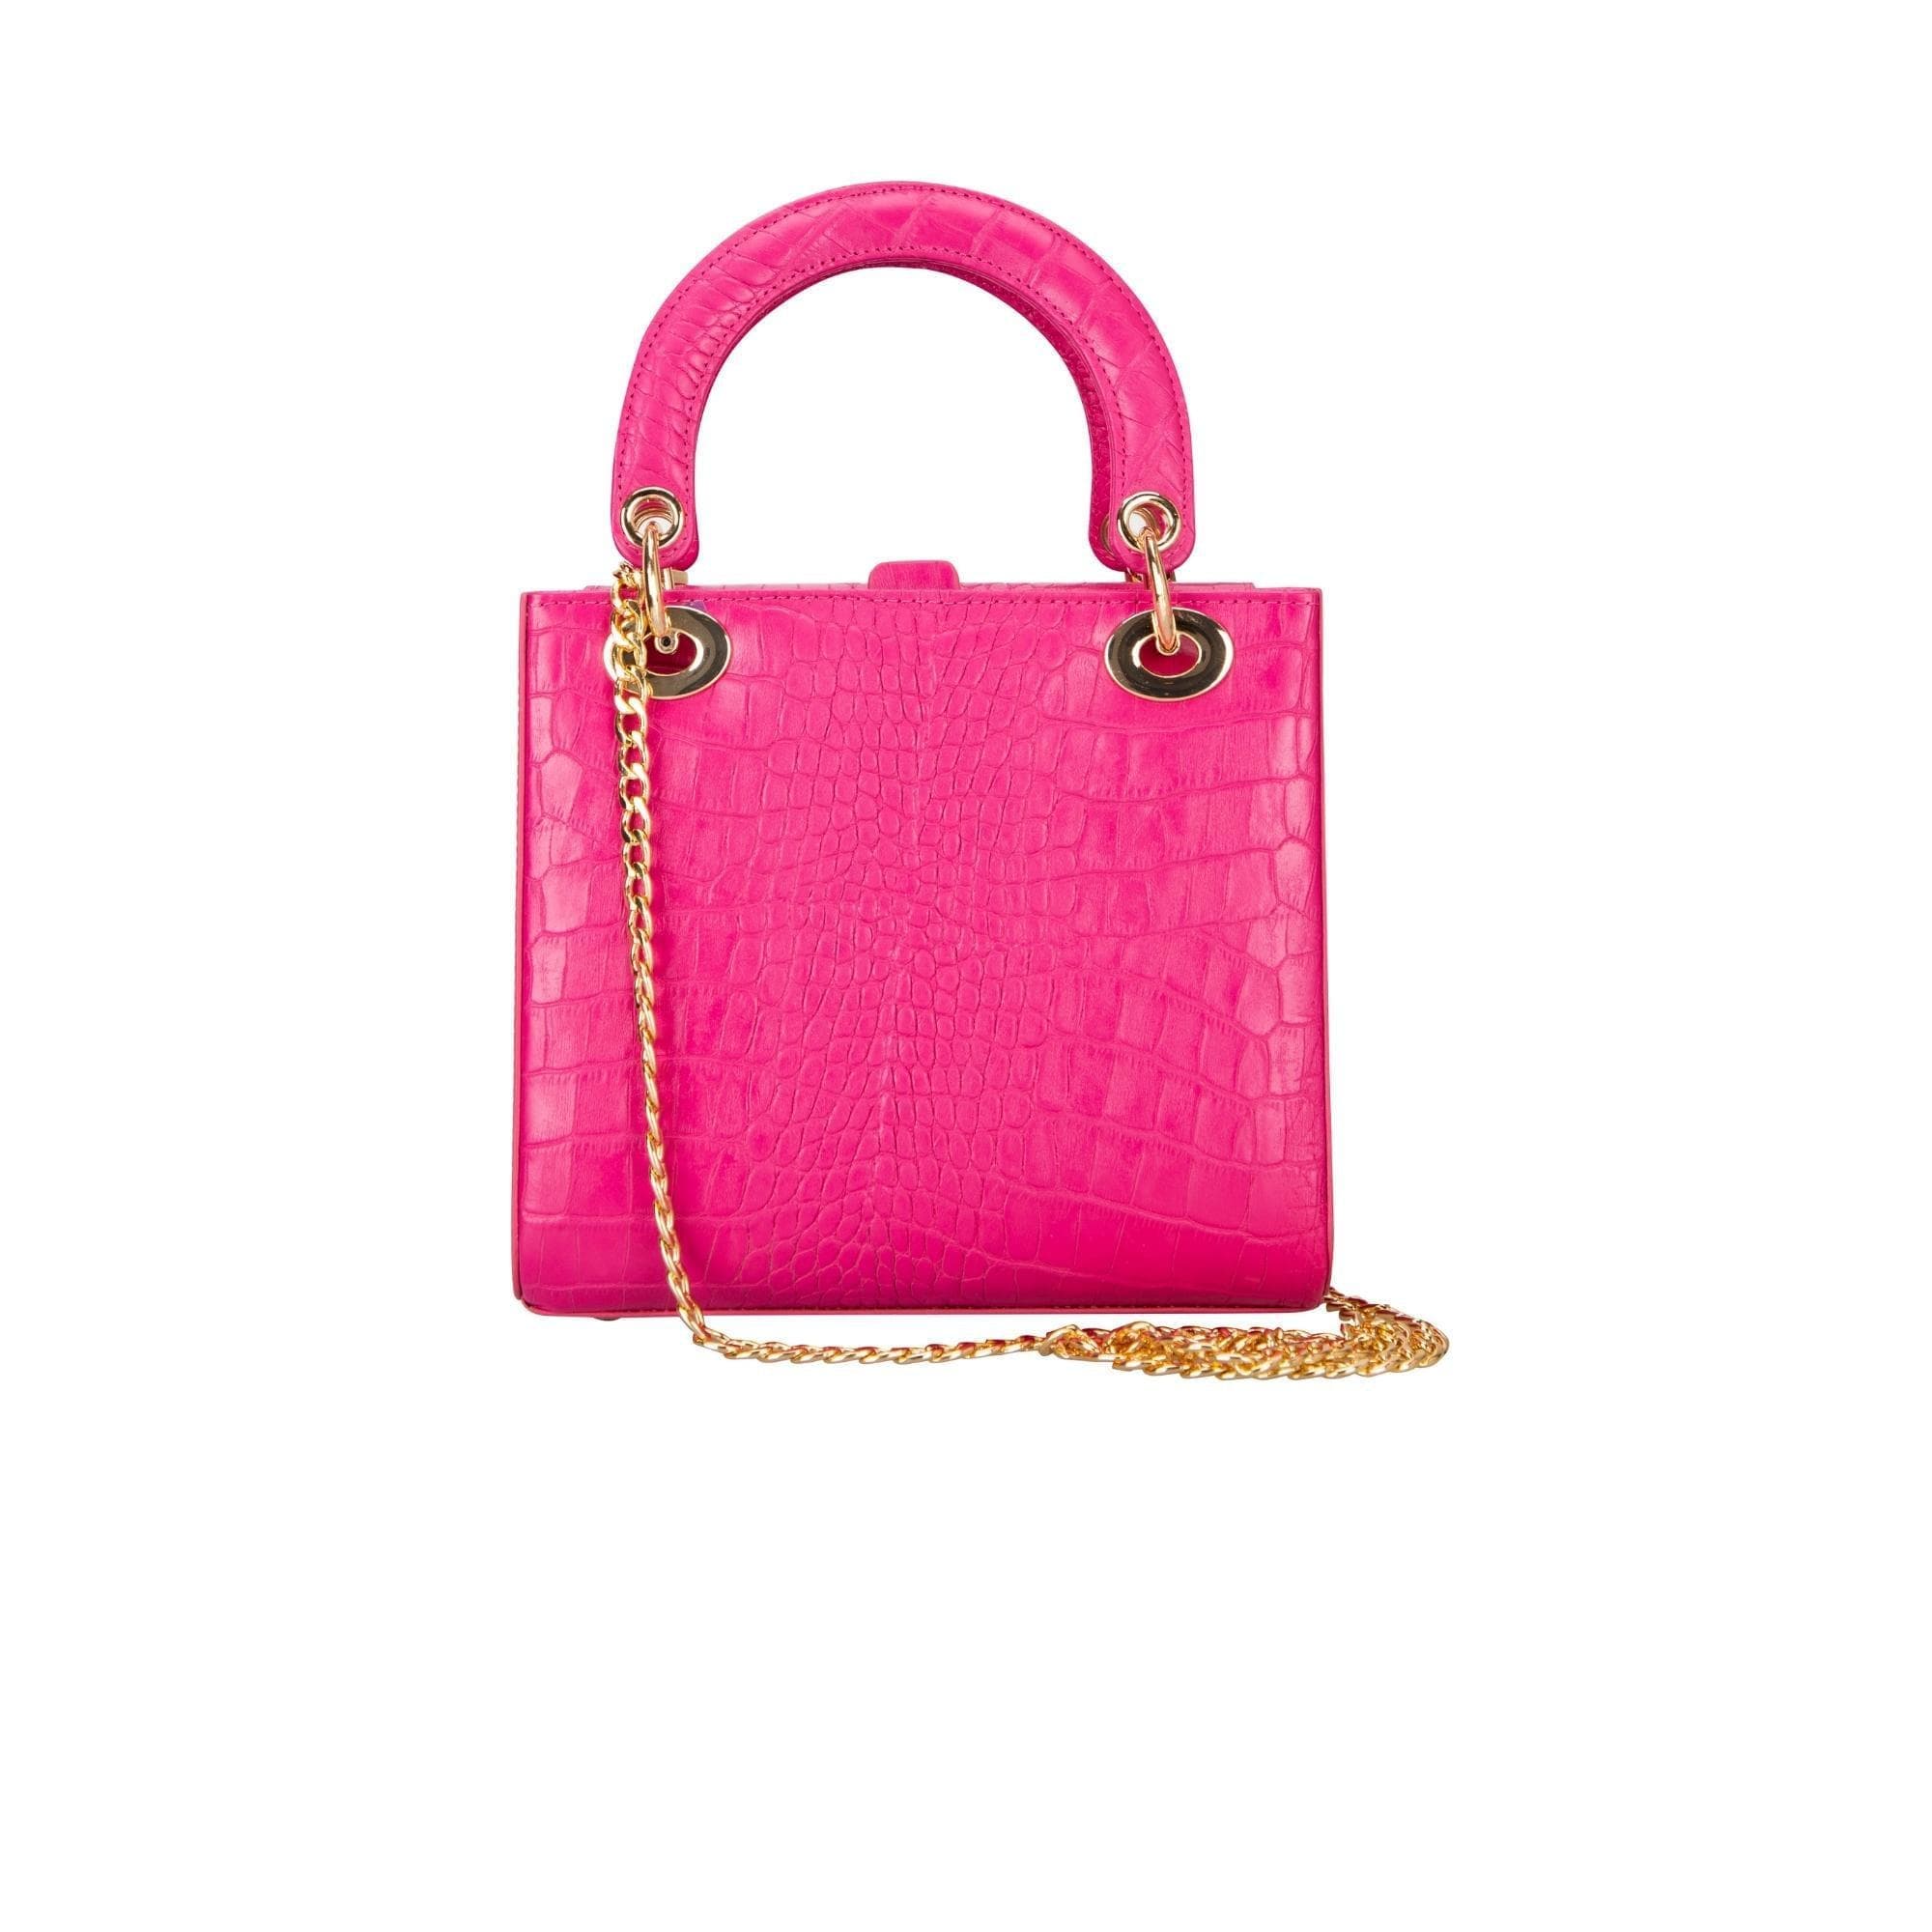 Pinny Geniune Leather Women’s Bag Cerise Pink Croco Bouletta LTD